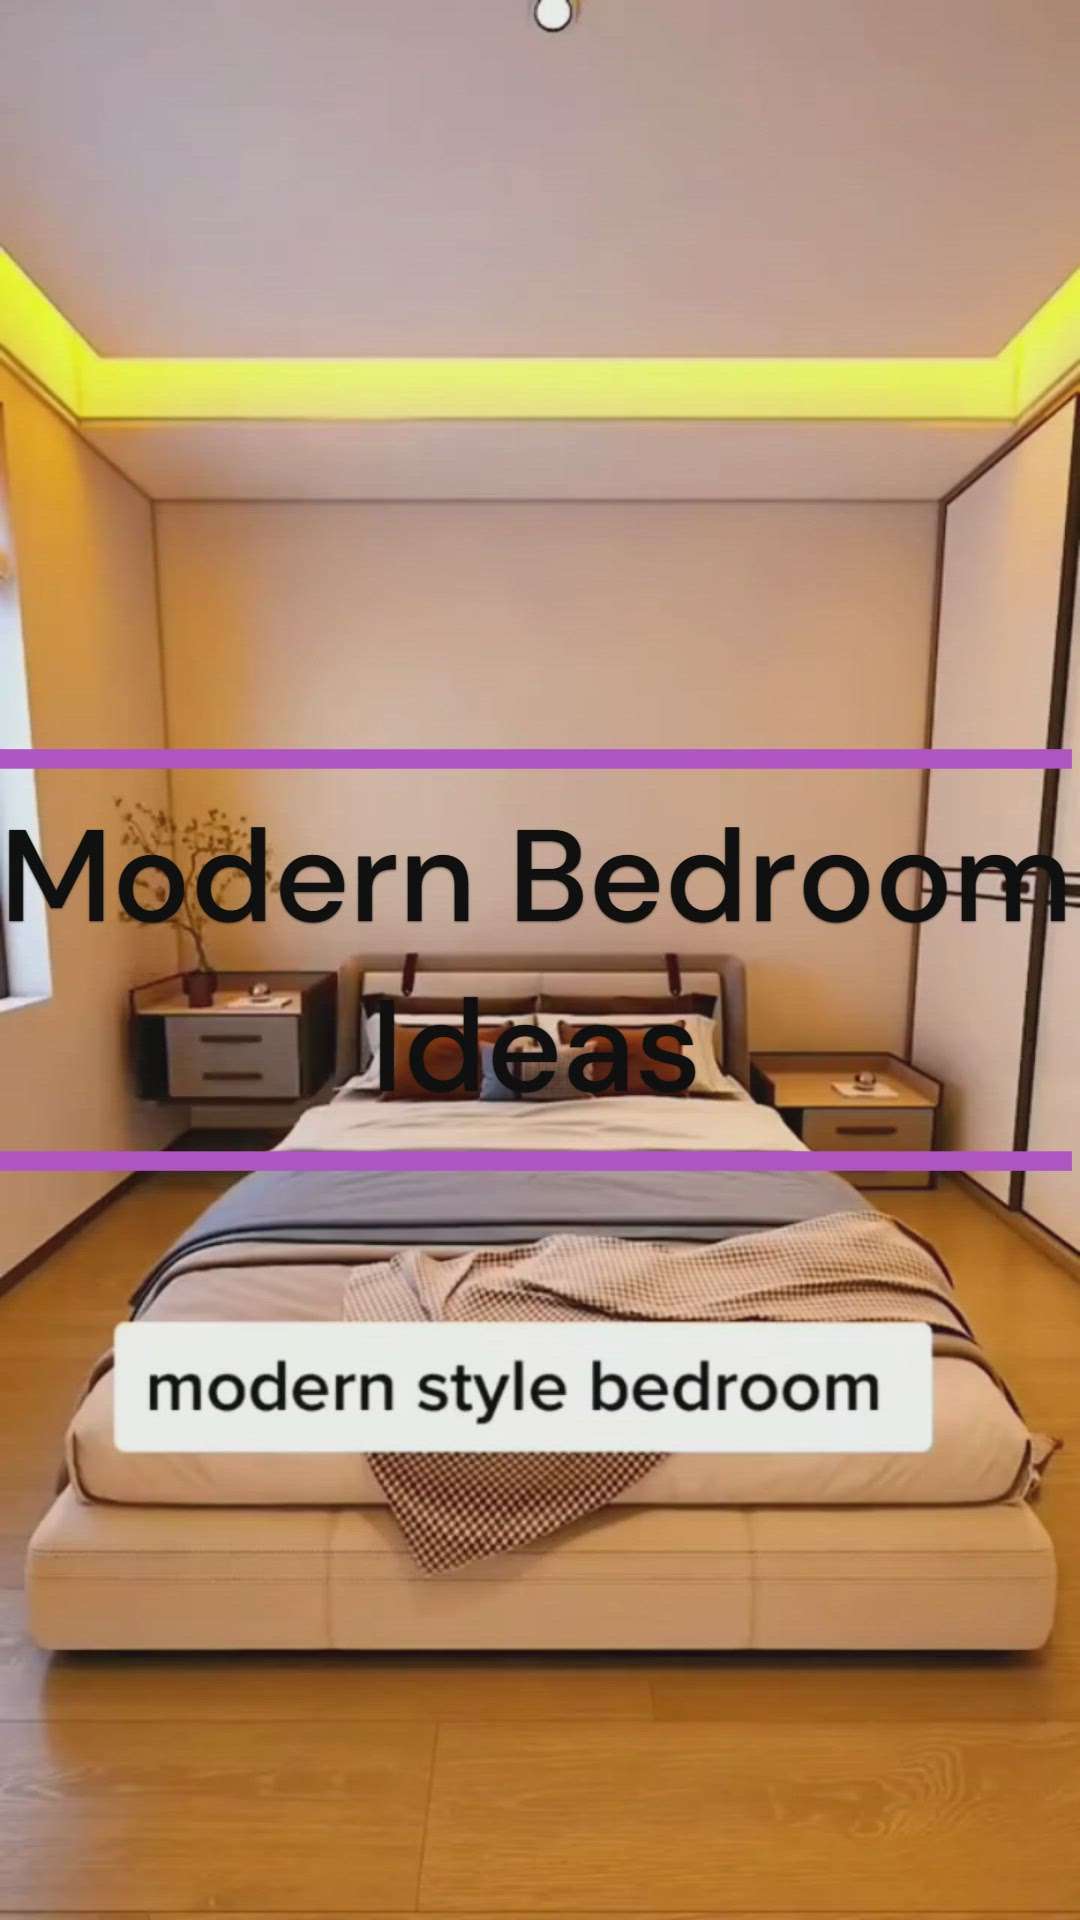 ✨ Masterful craftsmanship meets modern elegance in this stunning bedroom retreat! 🛏️✨ #CraftsmanChic #HomeDesignGoals #CozyElegance #DreamBedroom